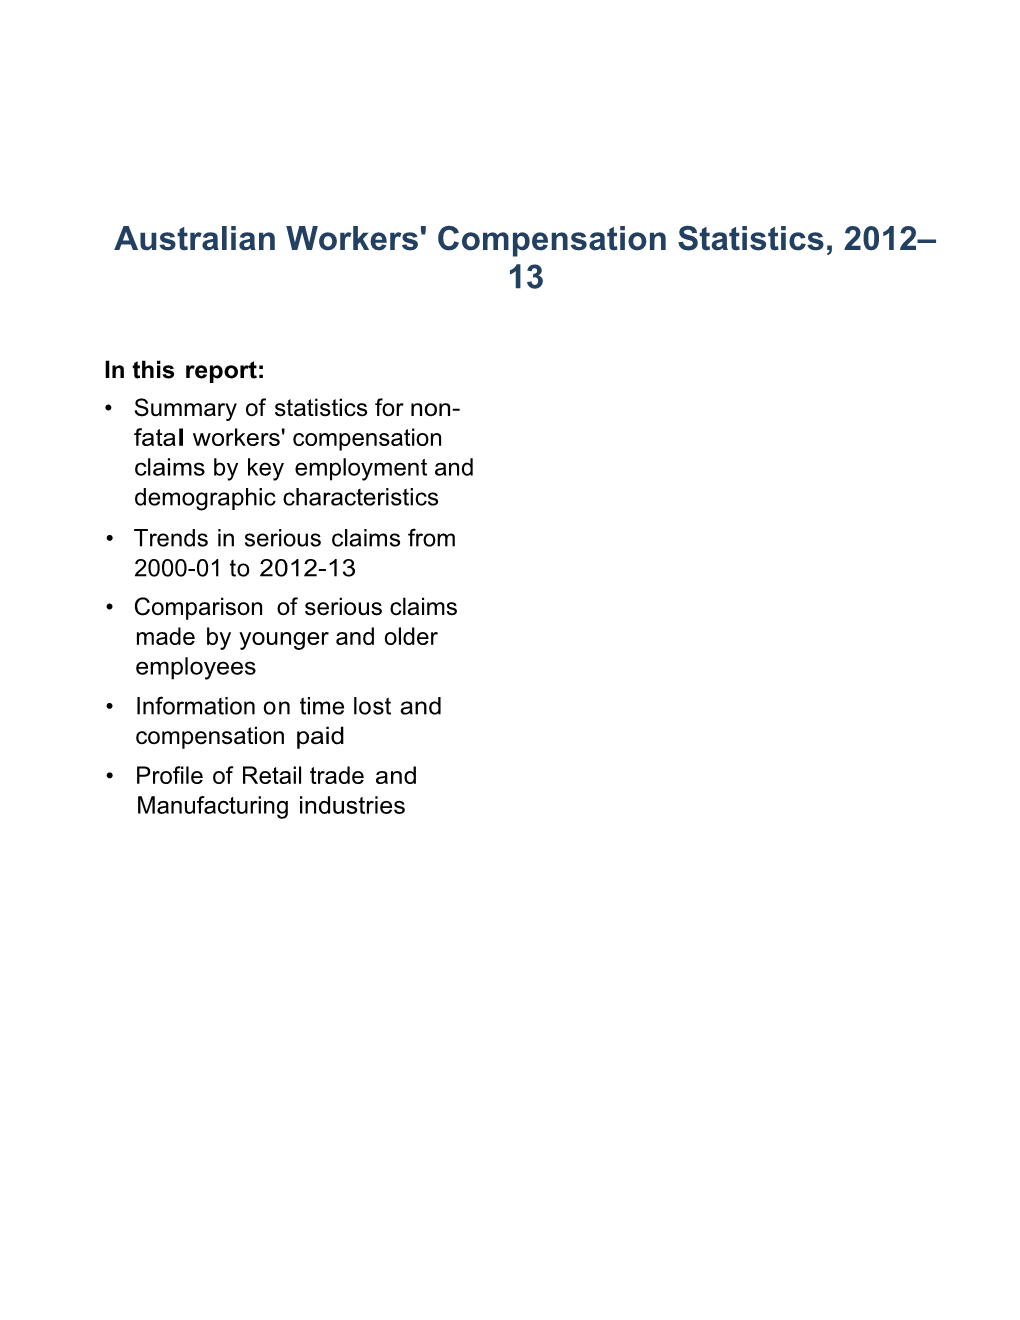 Australian Workers Compensation Statistics 2012-13